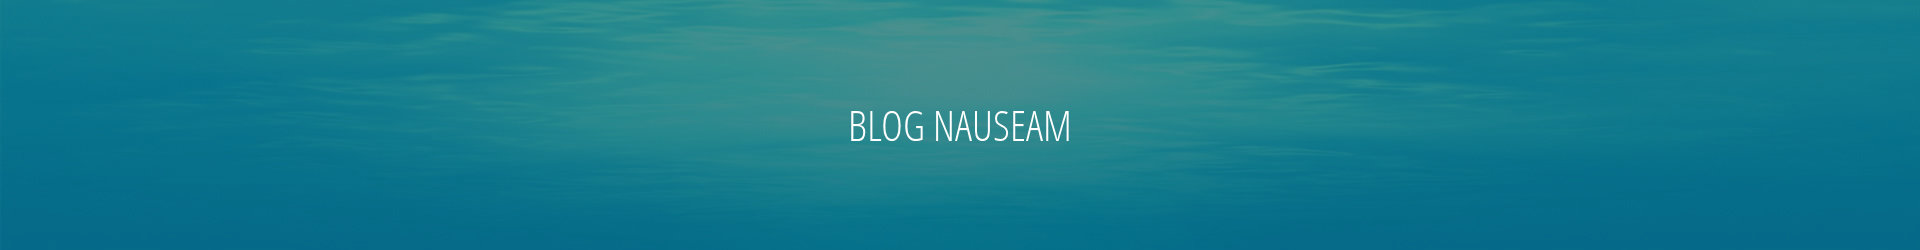 blog nauseam has moved!